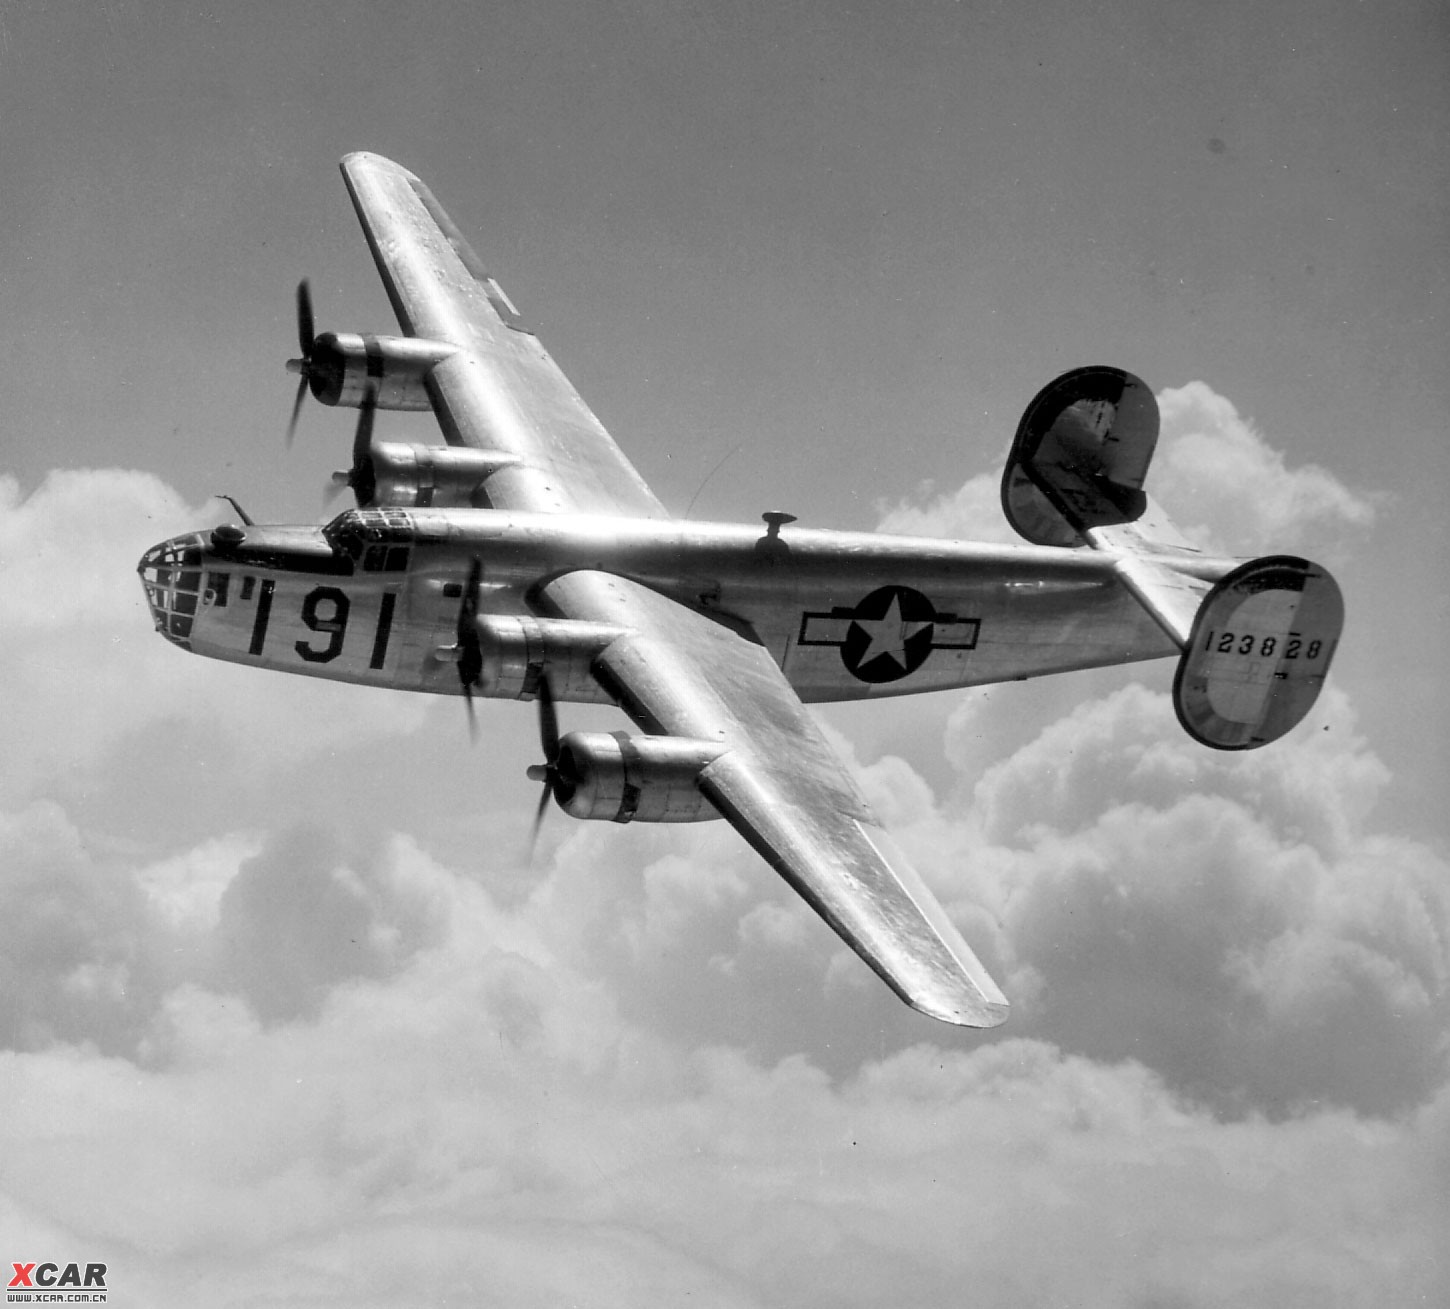 b24"解放者"是四发远程轰炸机,1941年交付使用,共生产约19,000架